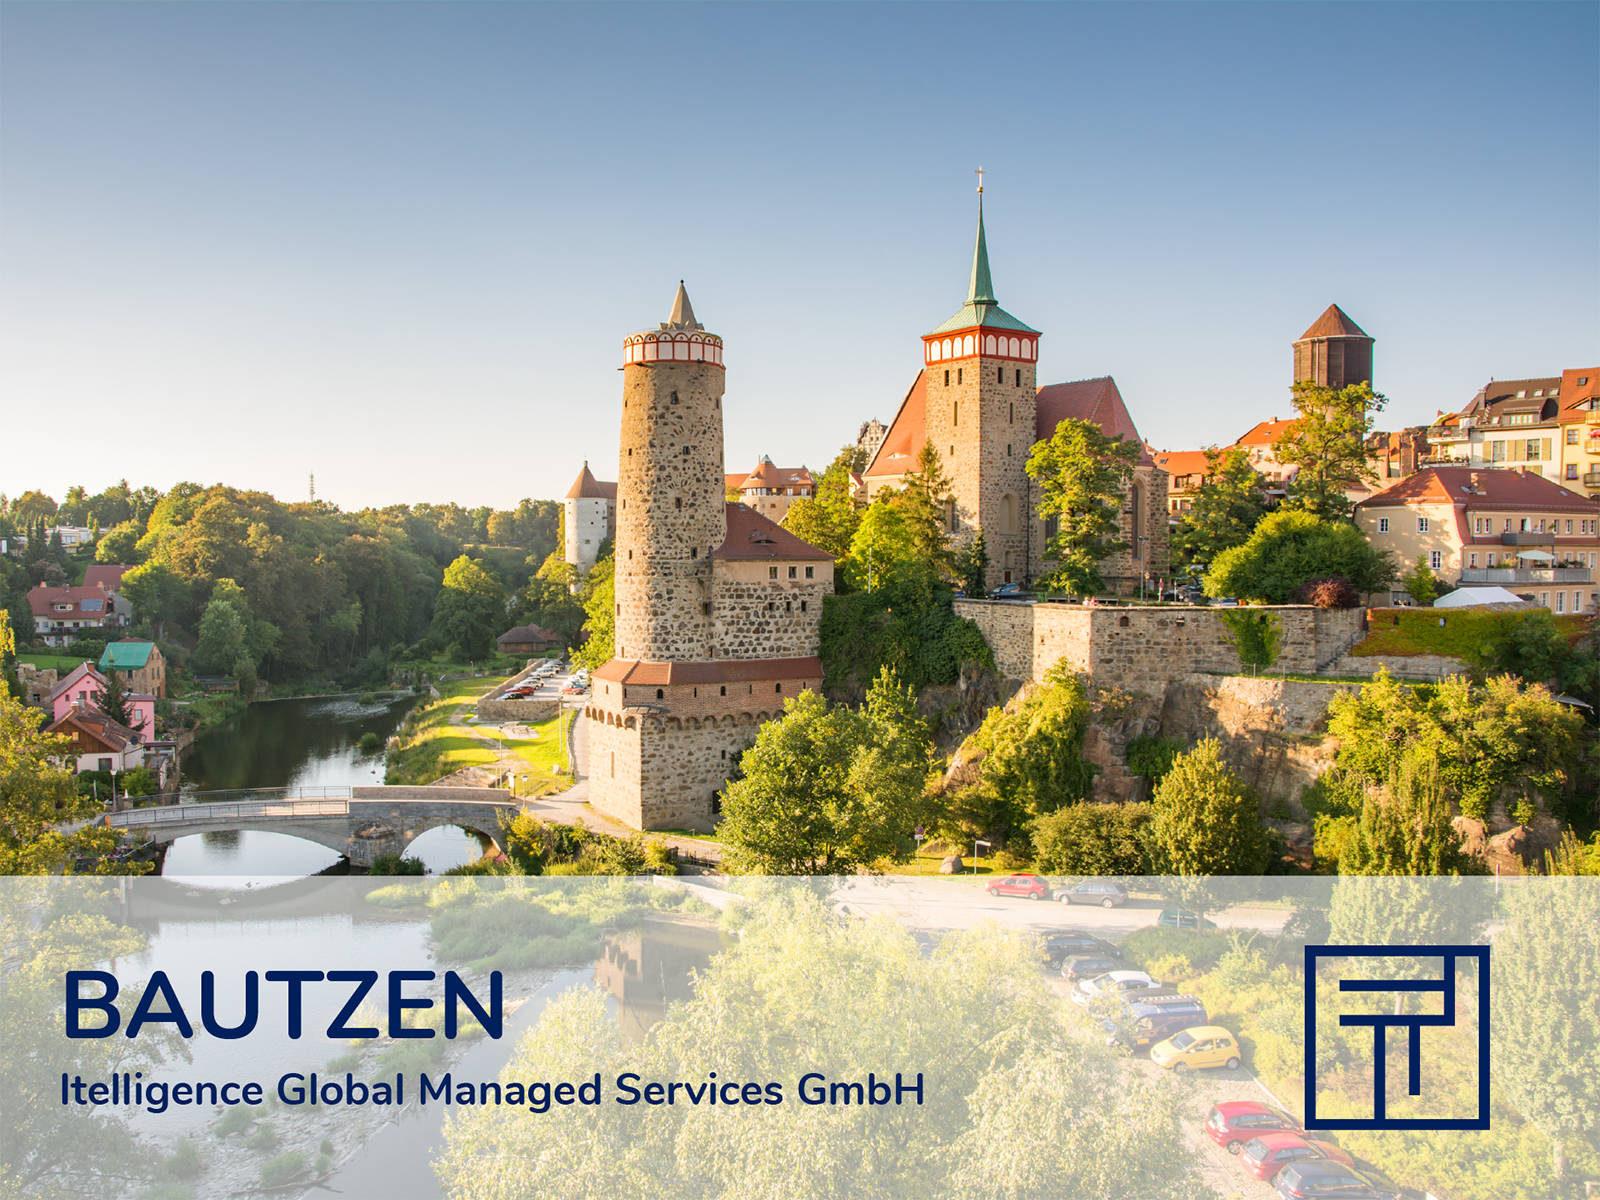 Bautzen Itelligence Global Managed Services GmbH